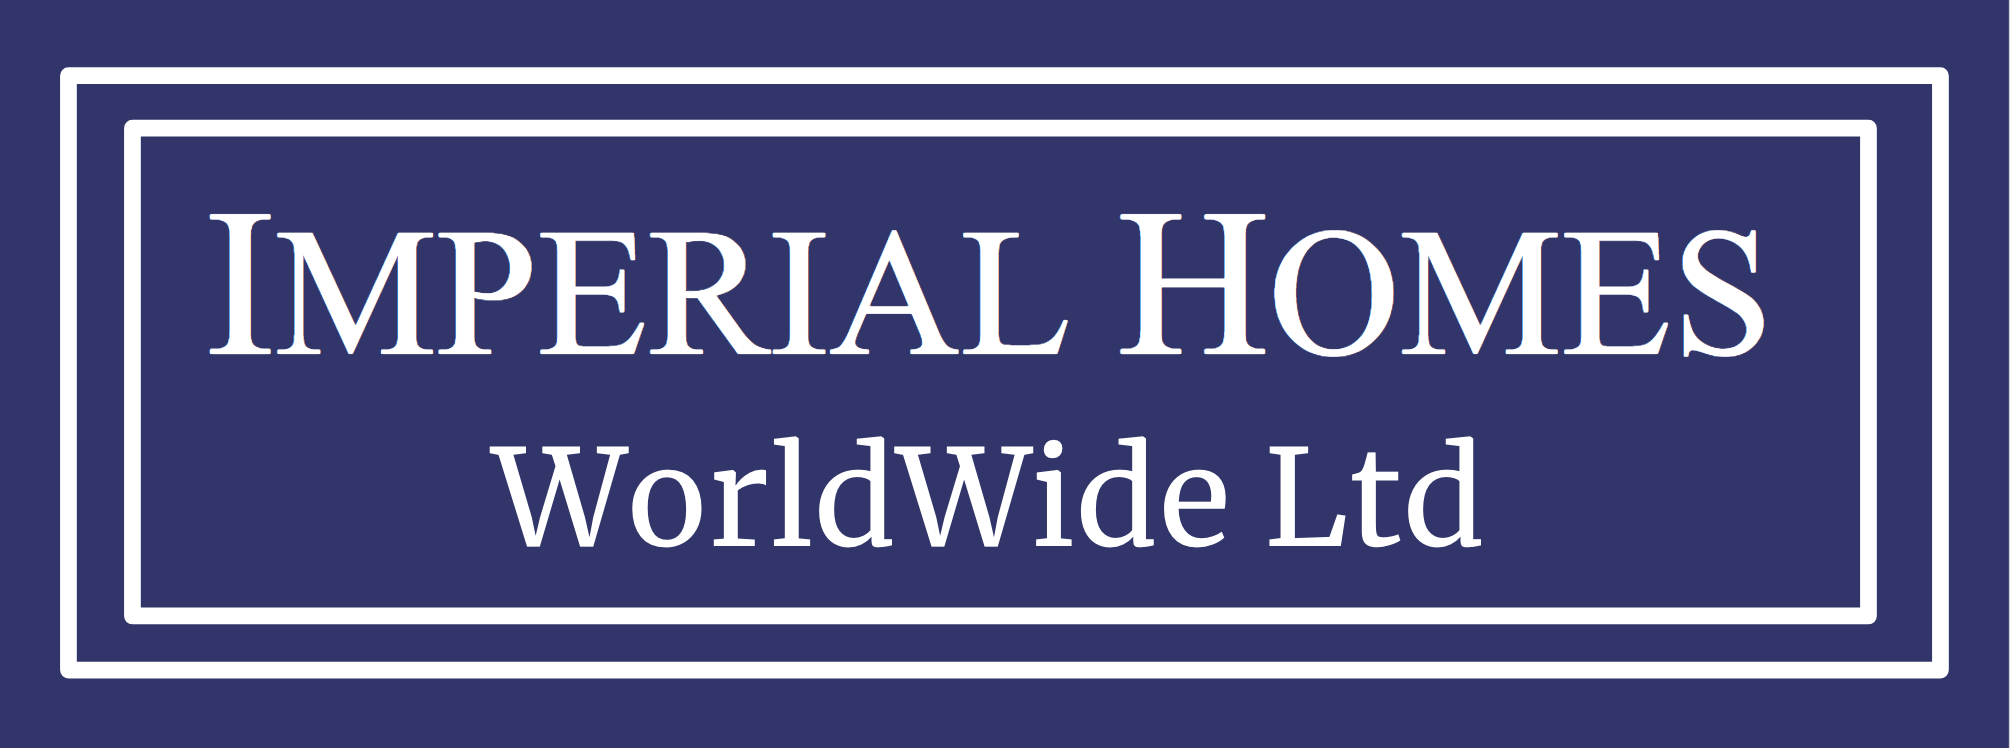 Imperial Homes WorldWide Ltd